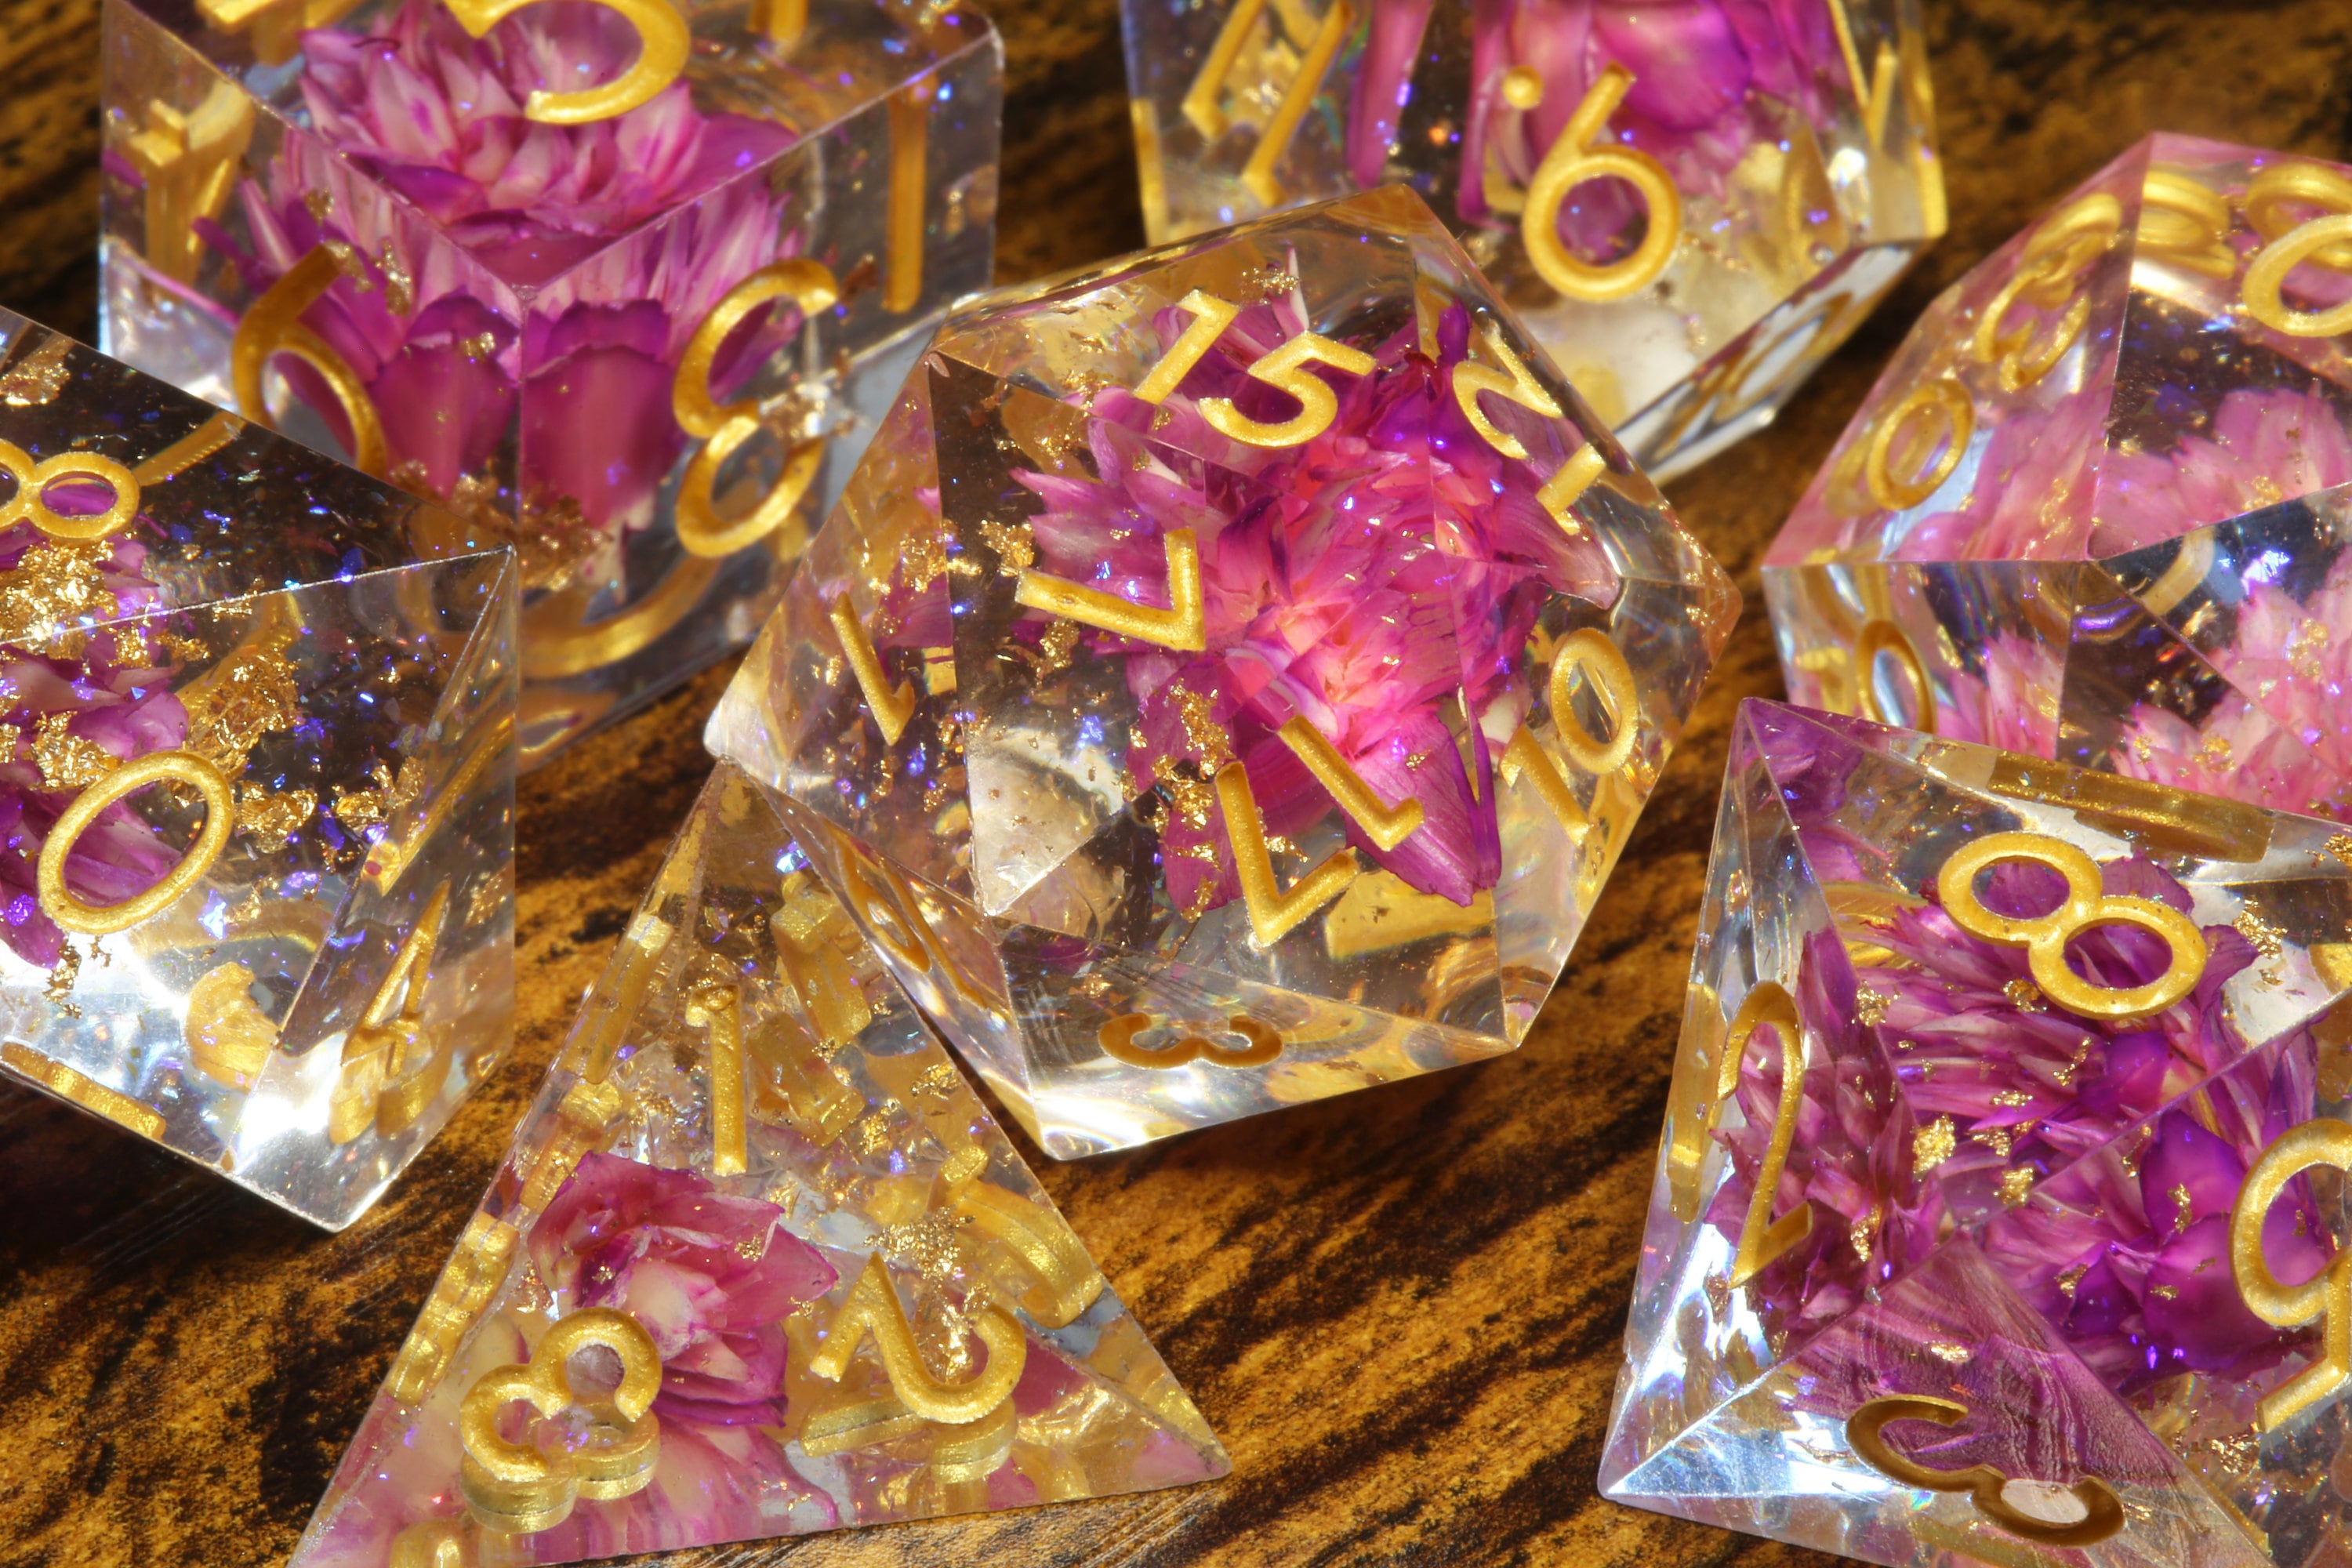 Pink Rose dice box with Fuchsia Pink flowers sharp edge dice set